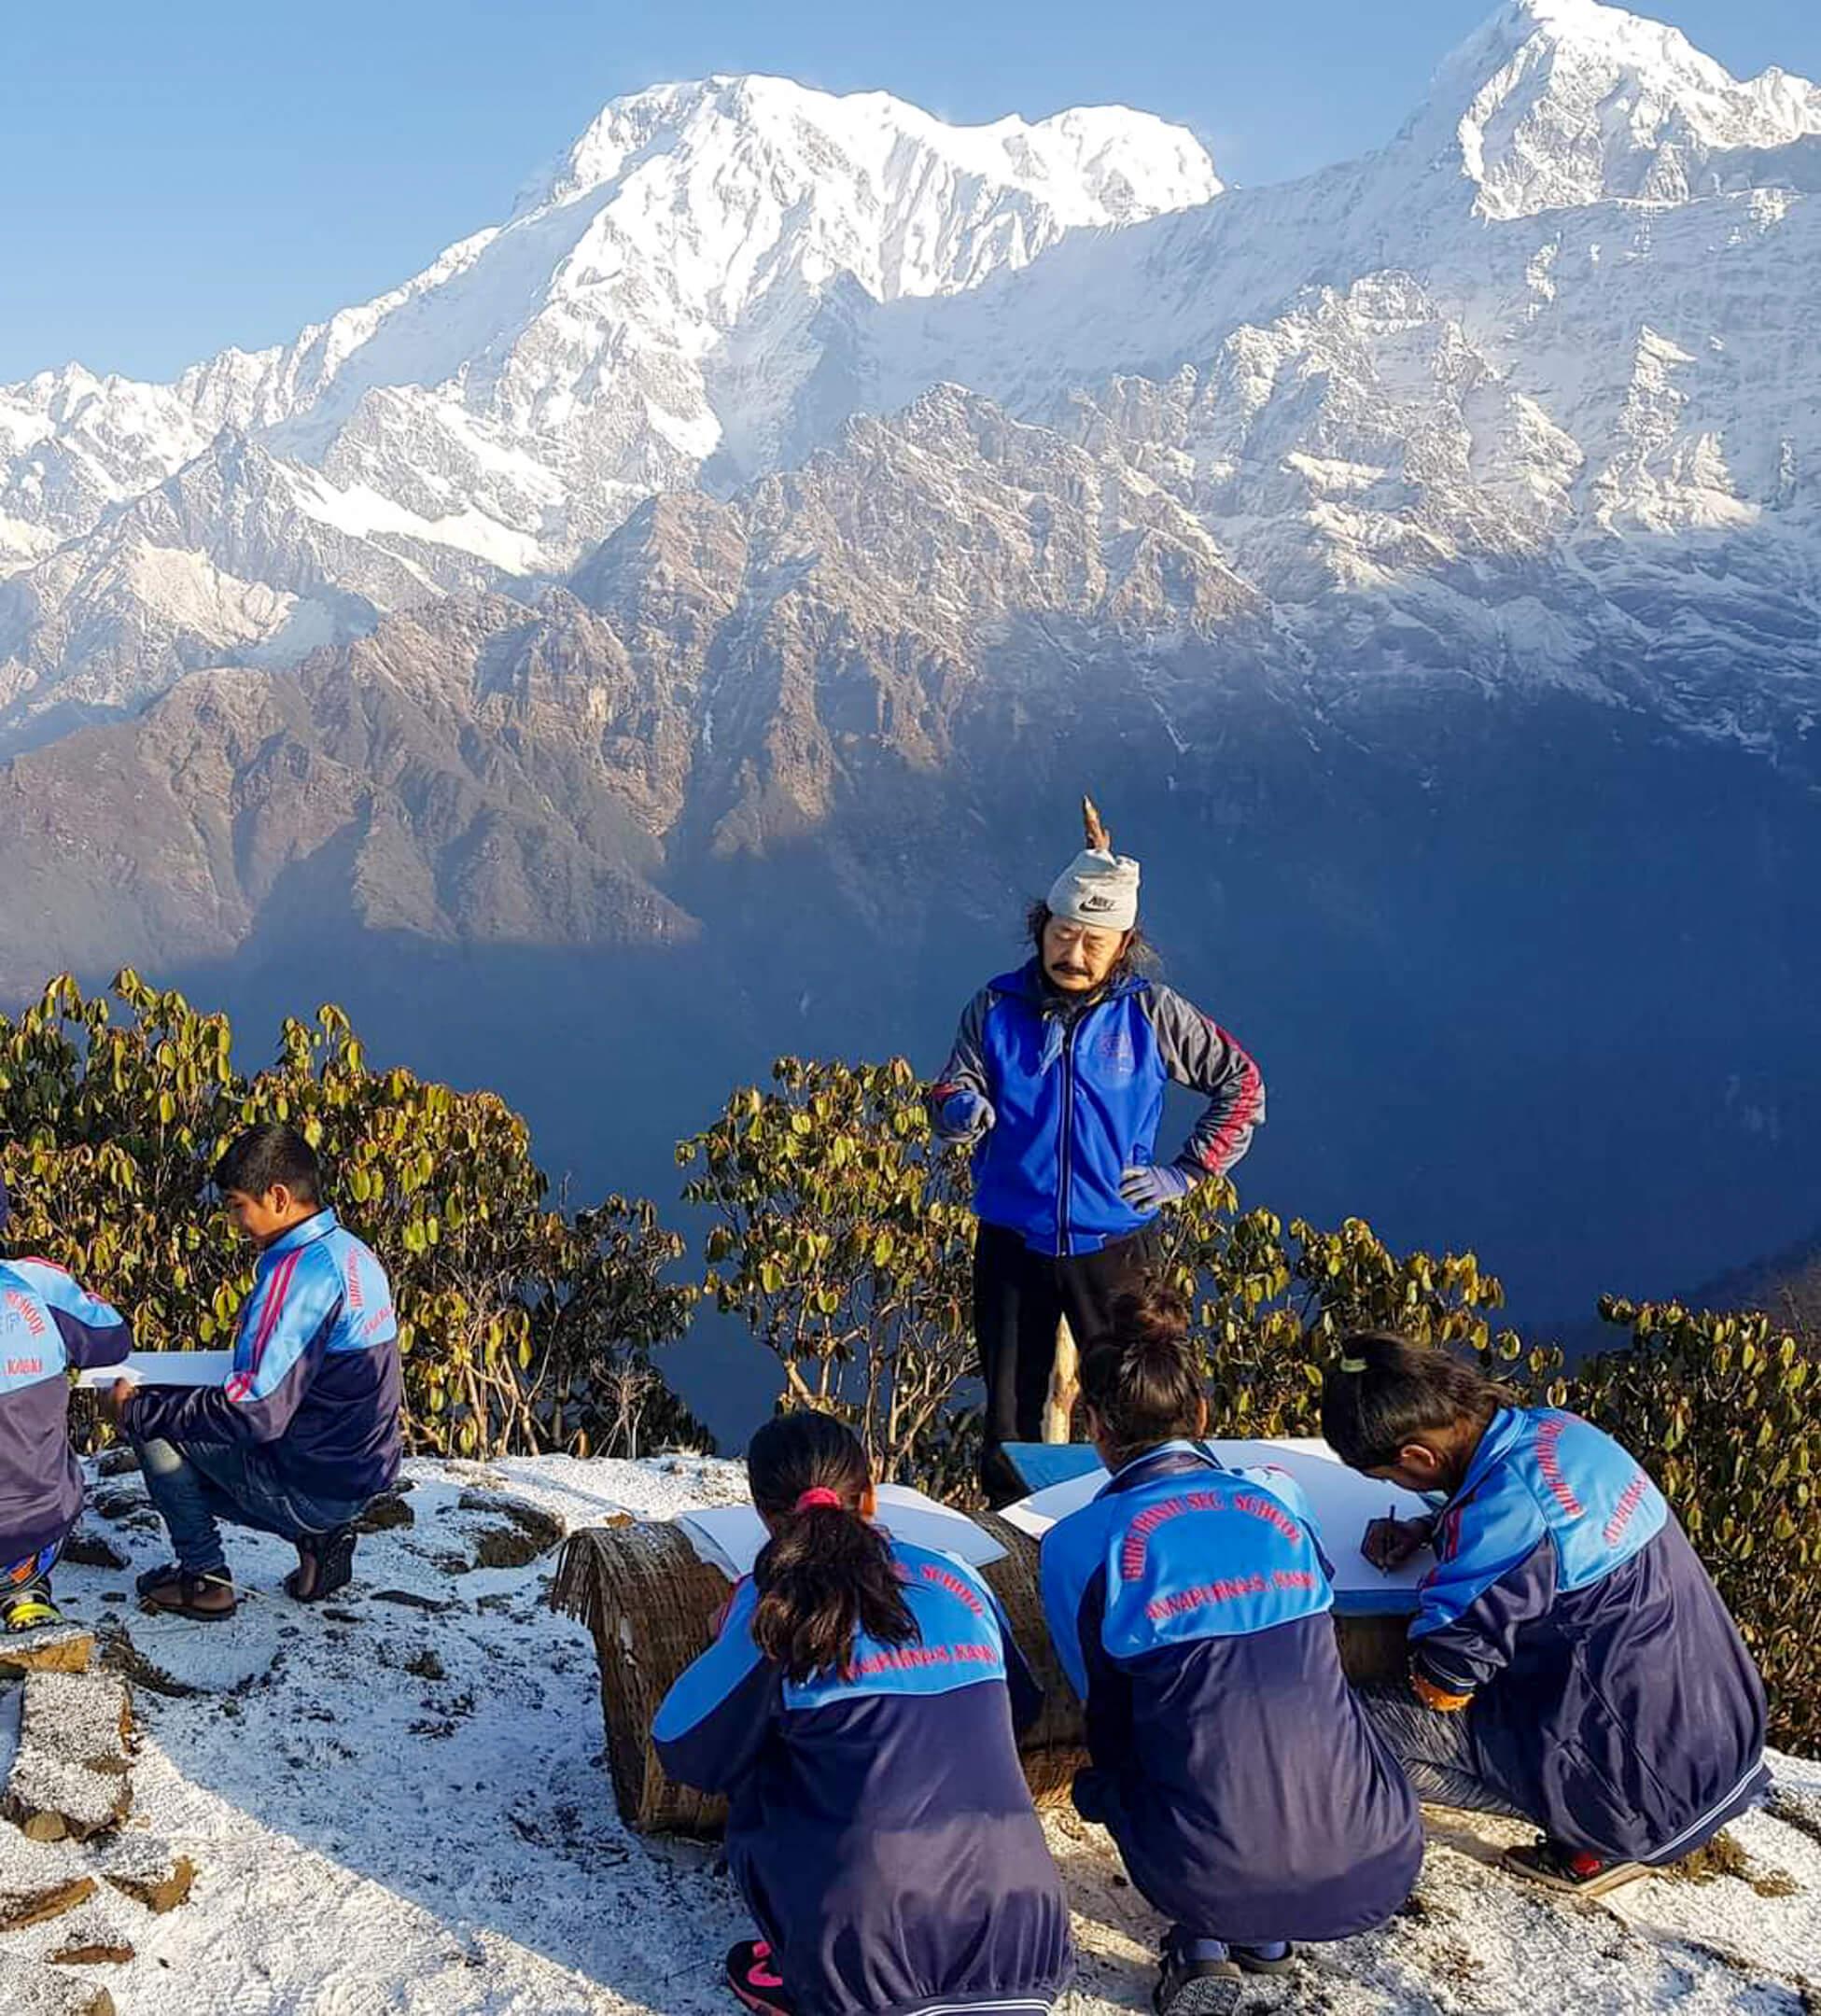 The Himalayan mountains create a powerful dropback for Kyu-Hun’s teachings.
Photographer: Kyu-hyun Kim